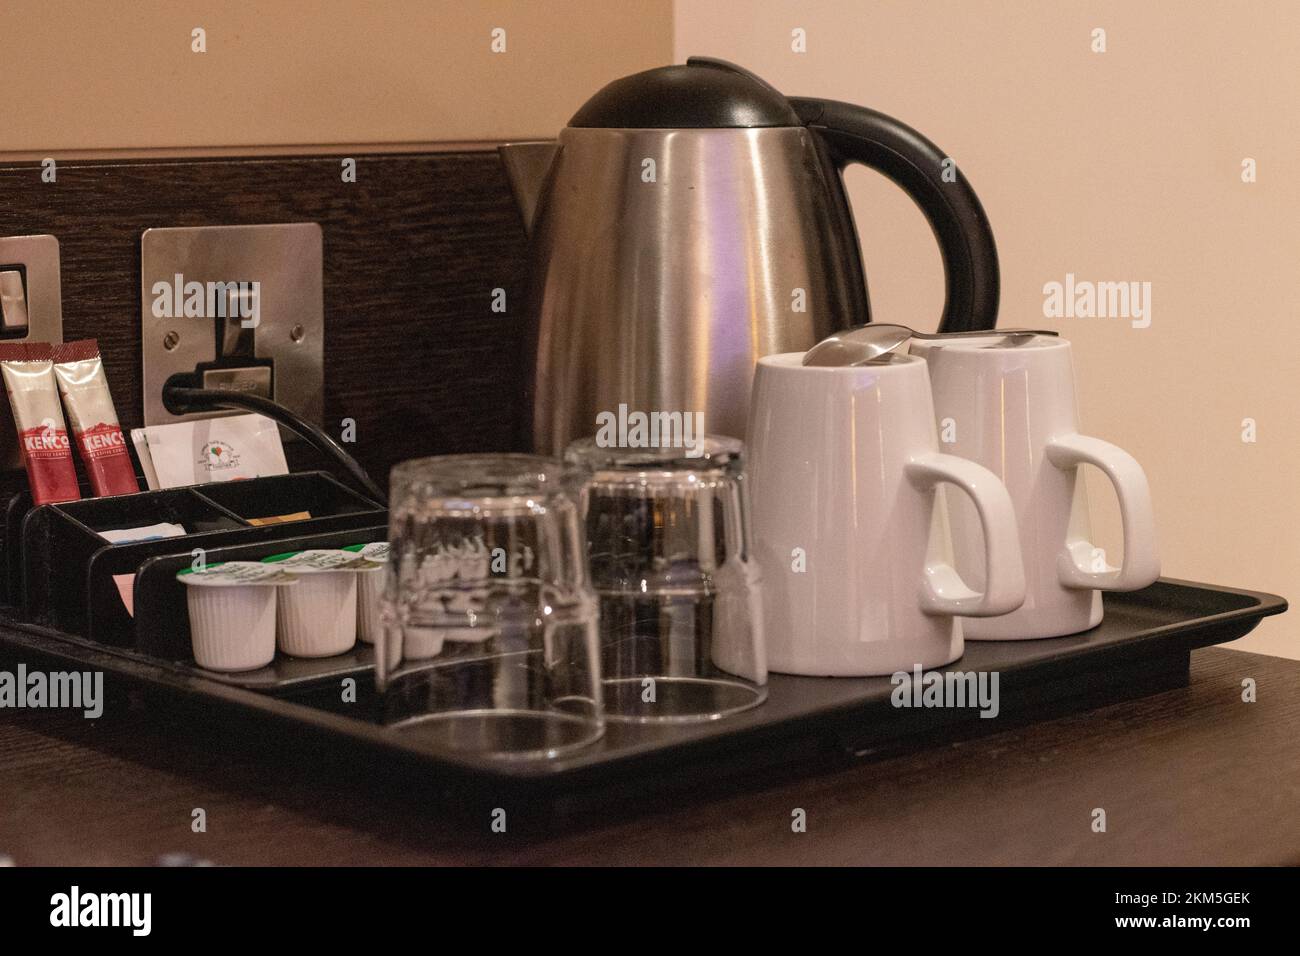 https://c8.alamy.com/comp/2KM5GEK/coffee-and-tea-making-facilities-cups-glasses-and-kettle-in-hotel-room-uk-hotel-chain-premier-inn-2KM5GEK.jpg